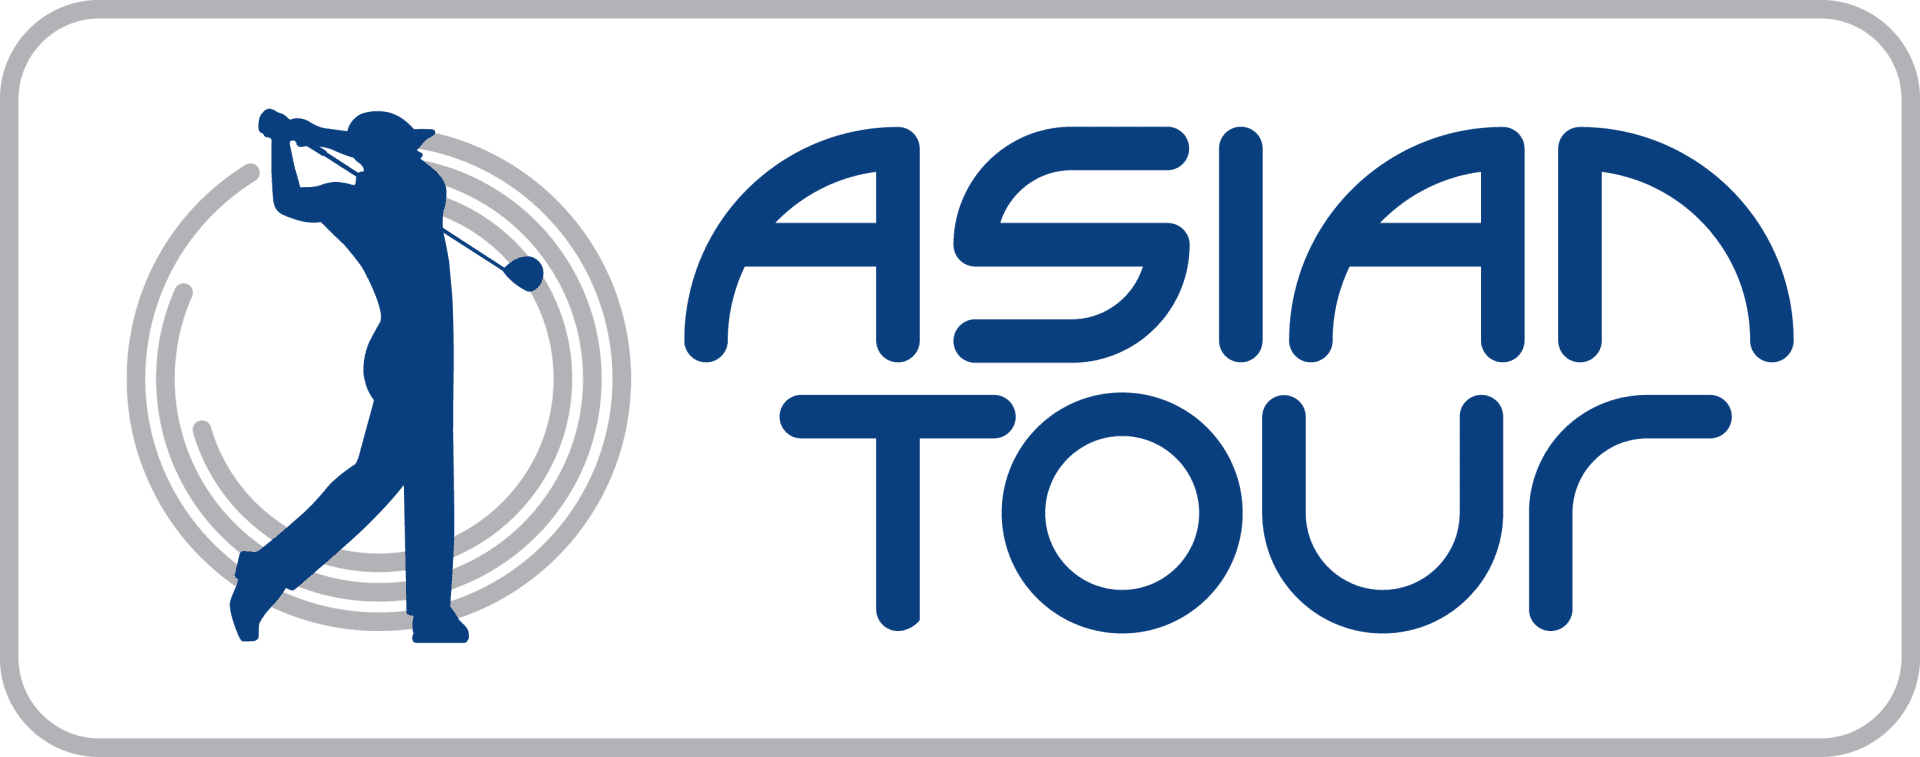 golf asian tour leaderboard